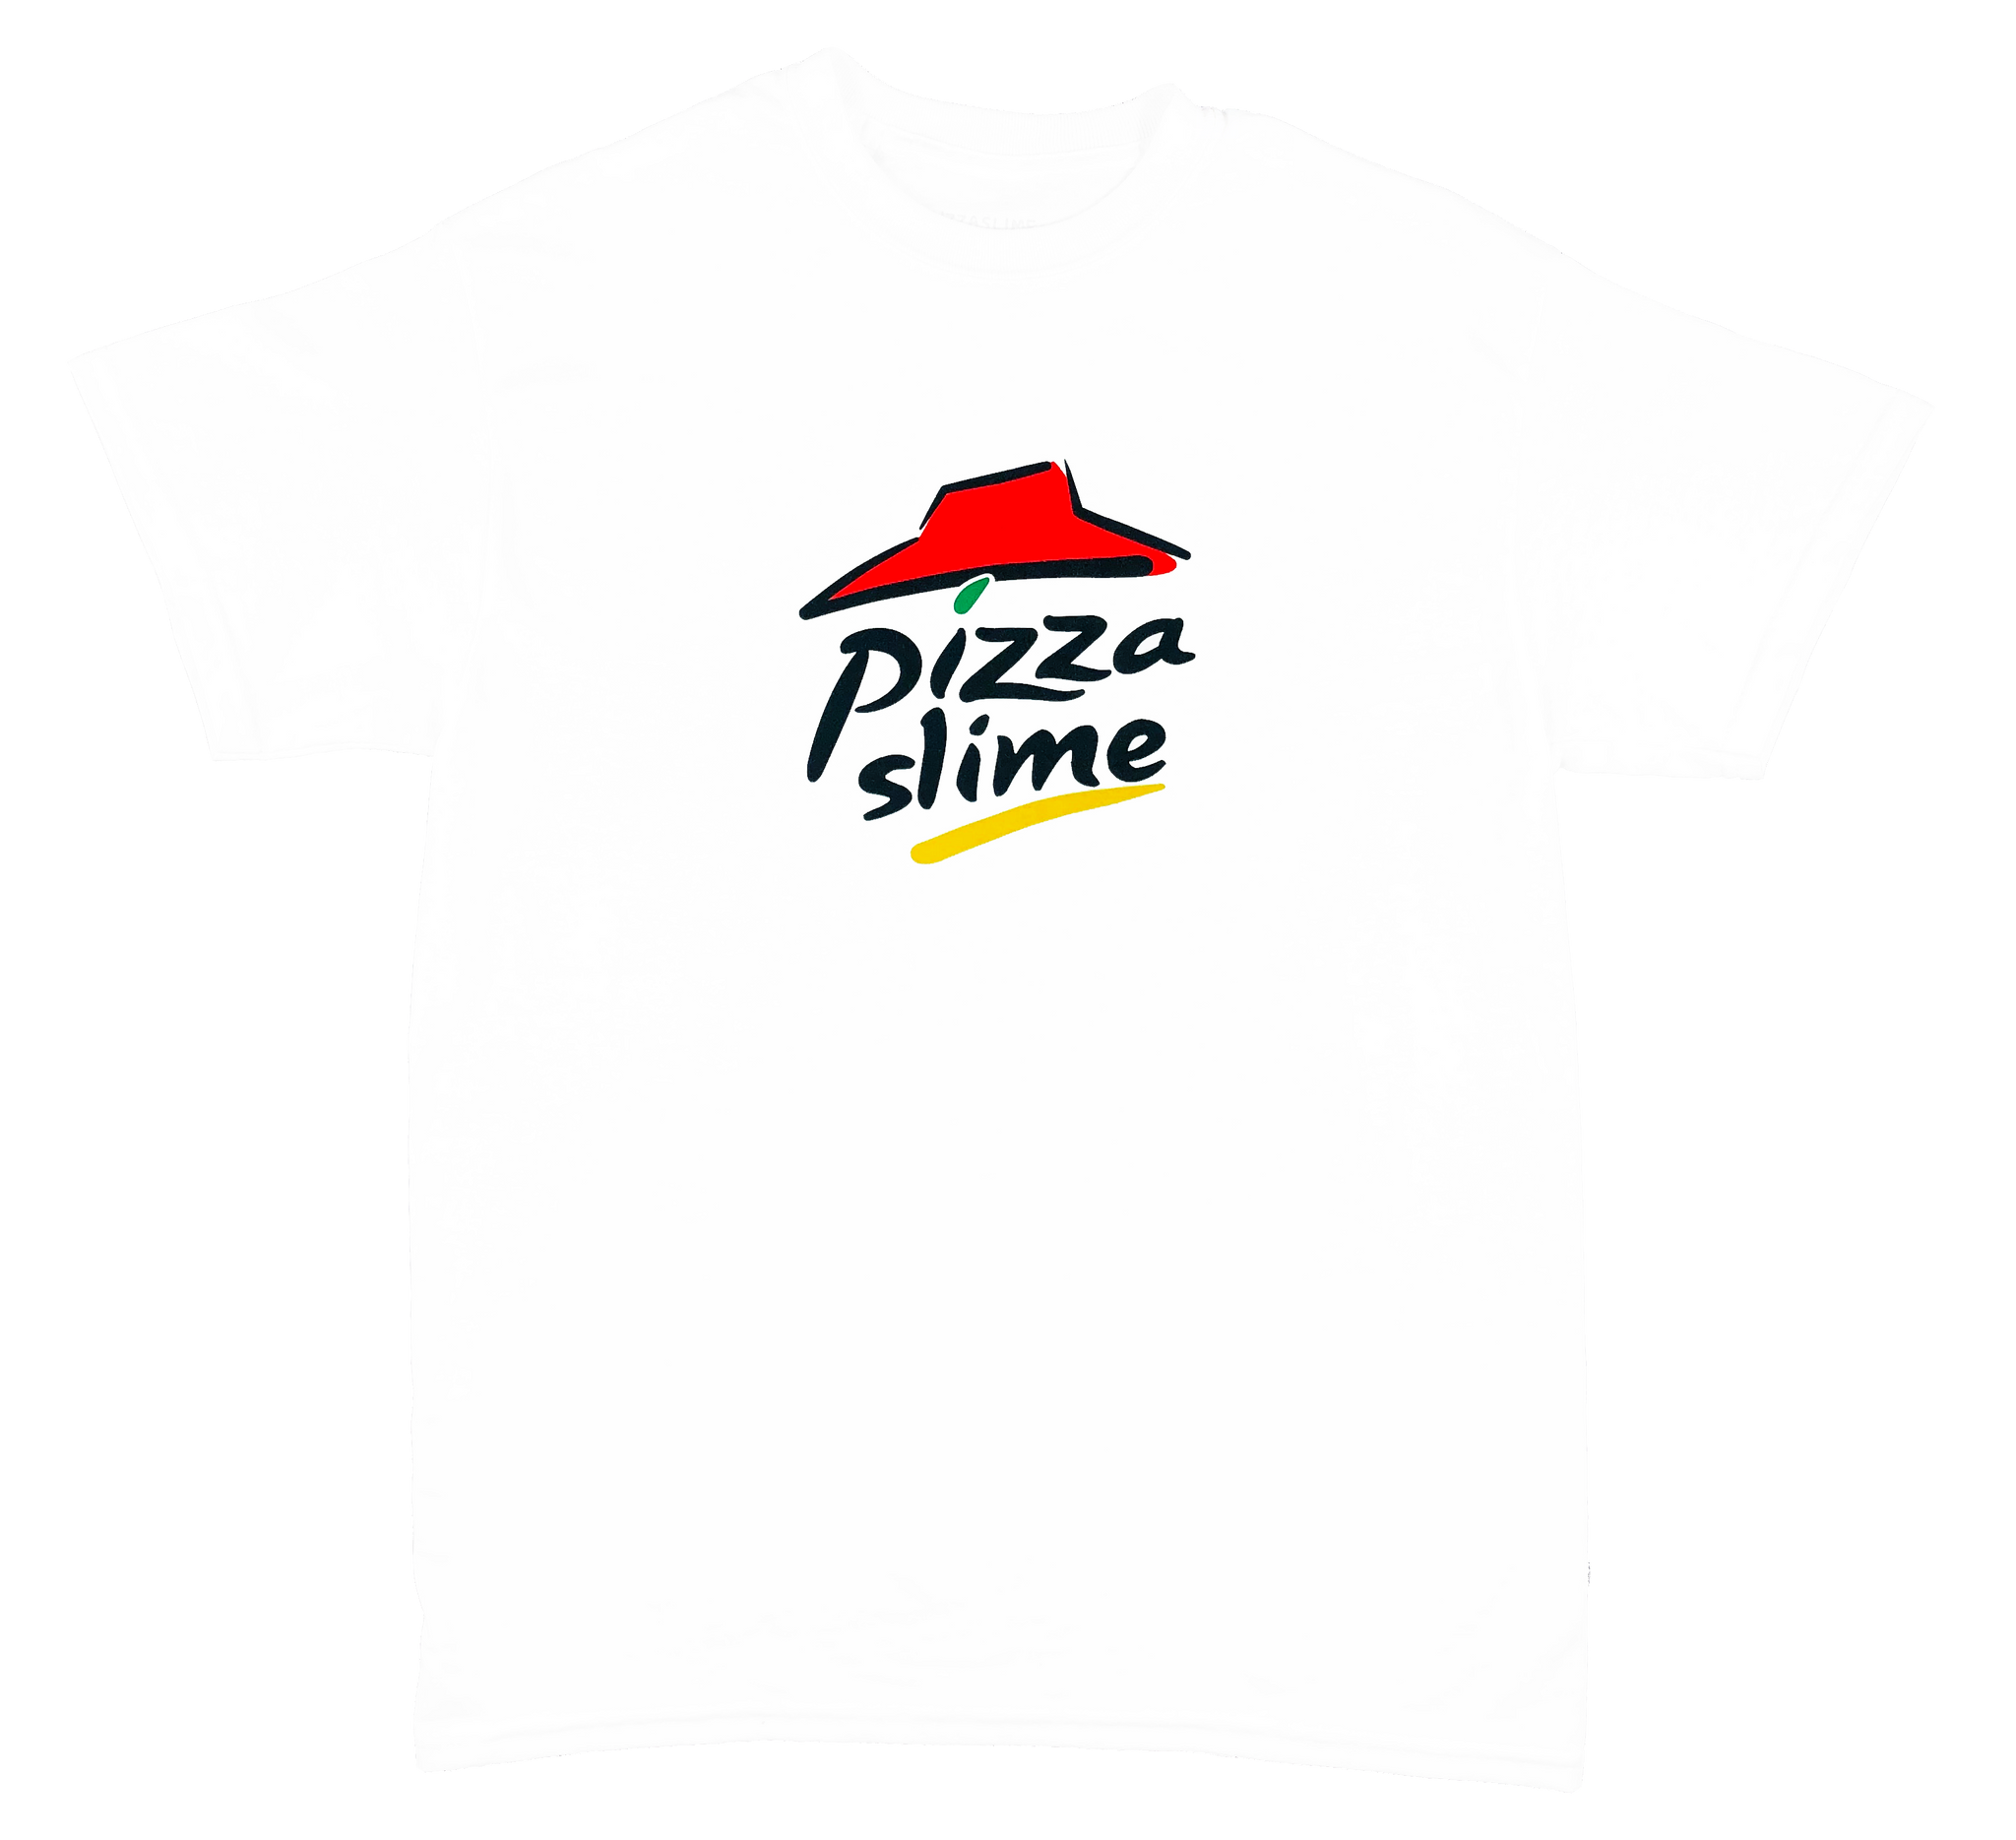 PIZZASLIMEHUT t-shirt